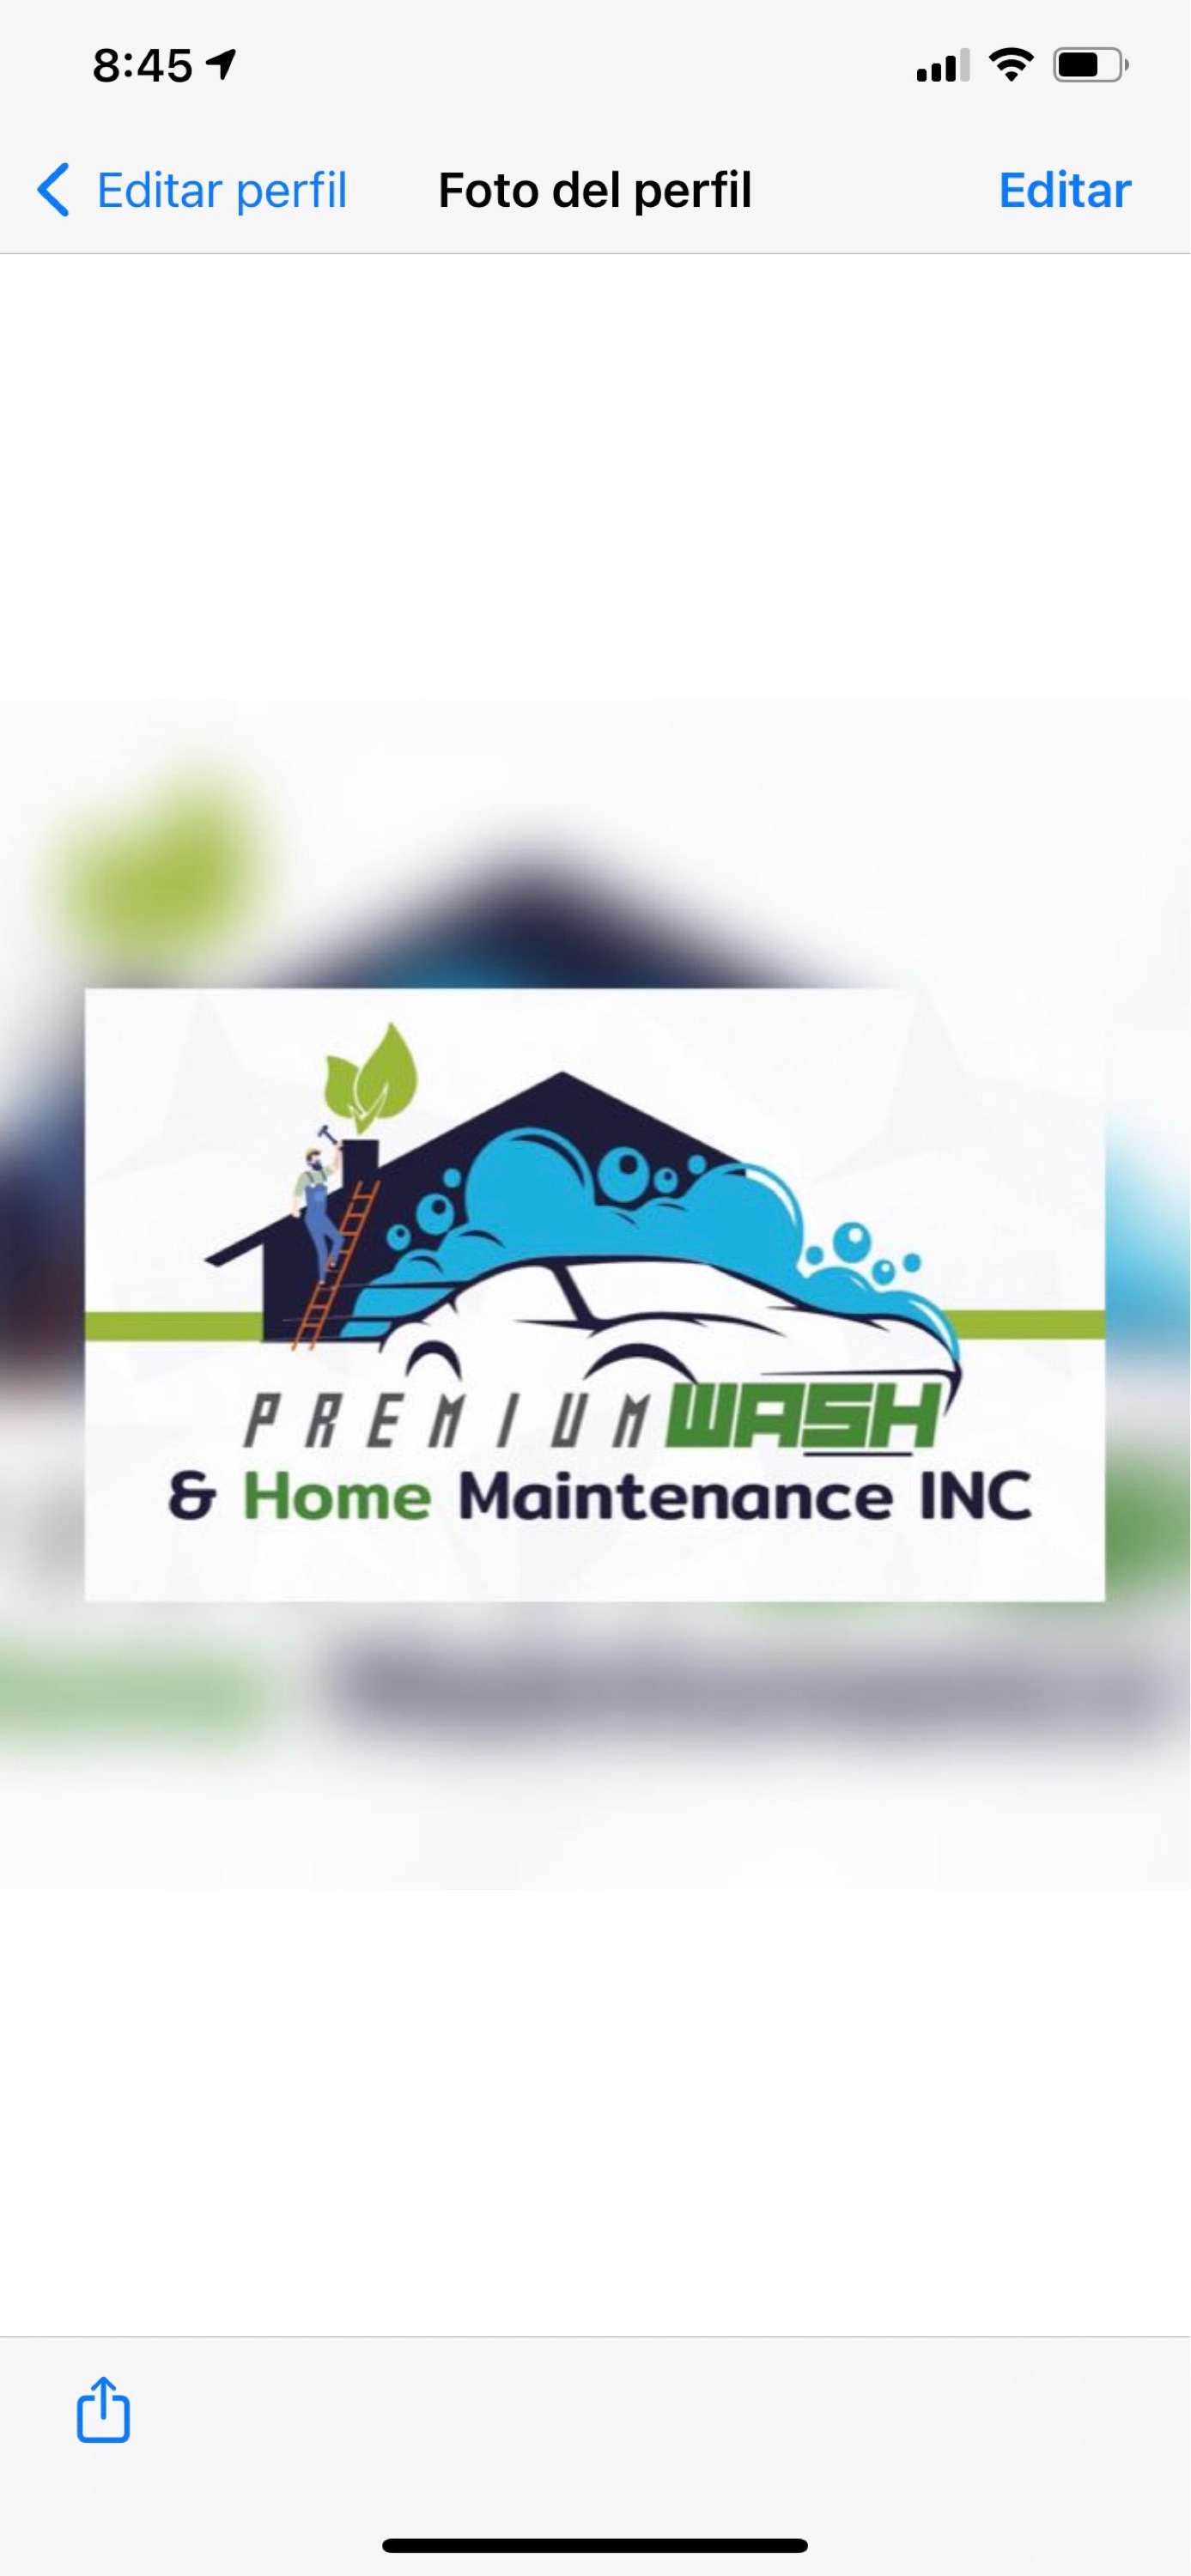 Premium Wash & Home Maintenance Inc Logo